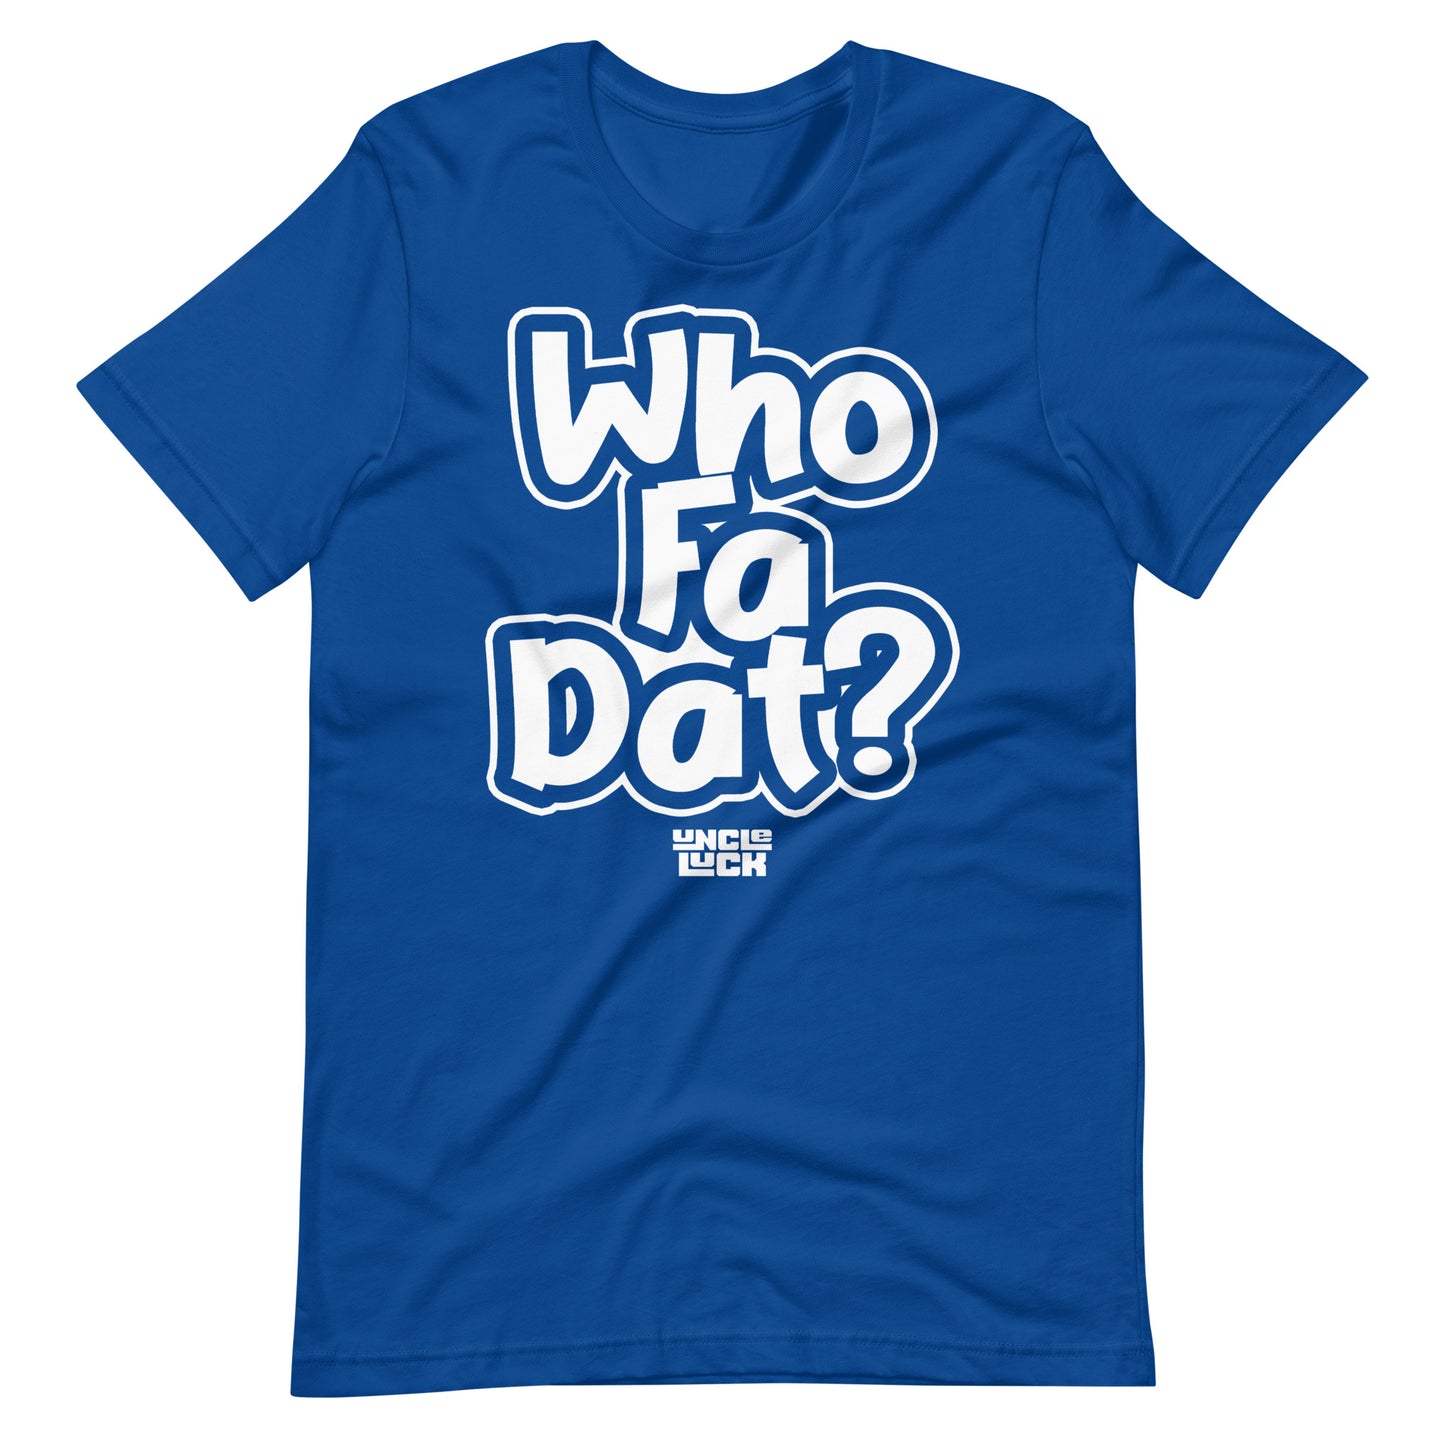 "Who Fa dat?" Unisex t-shirt